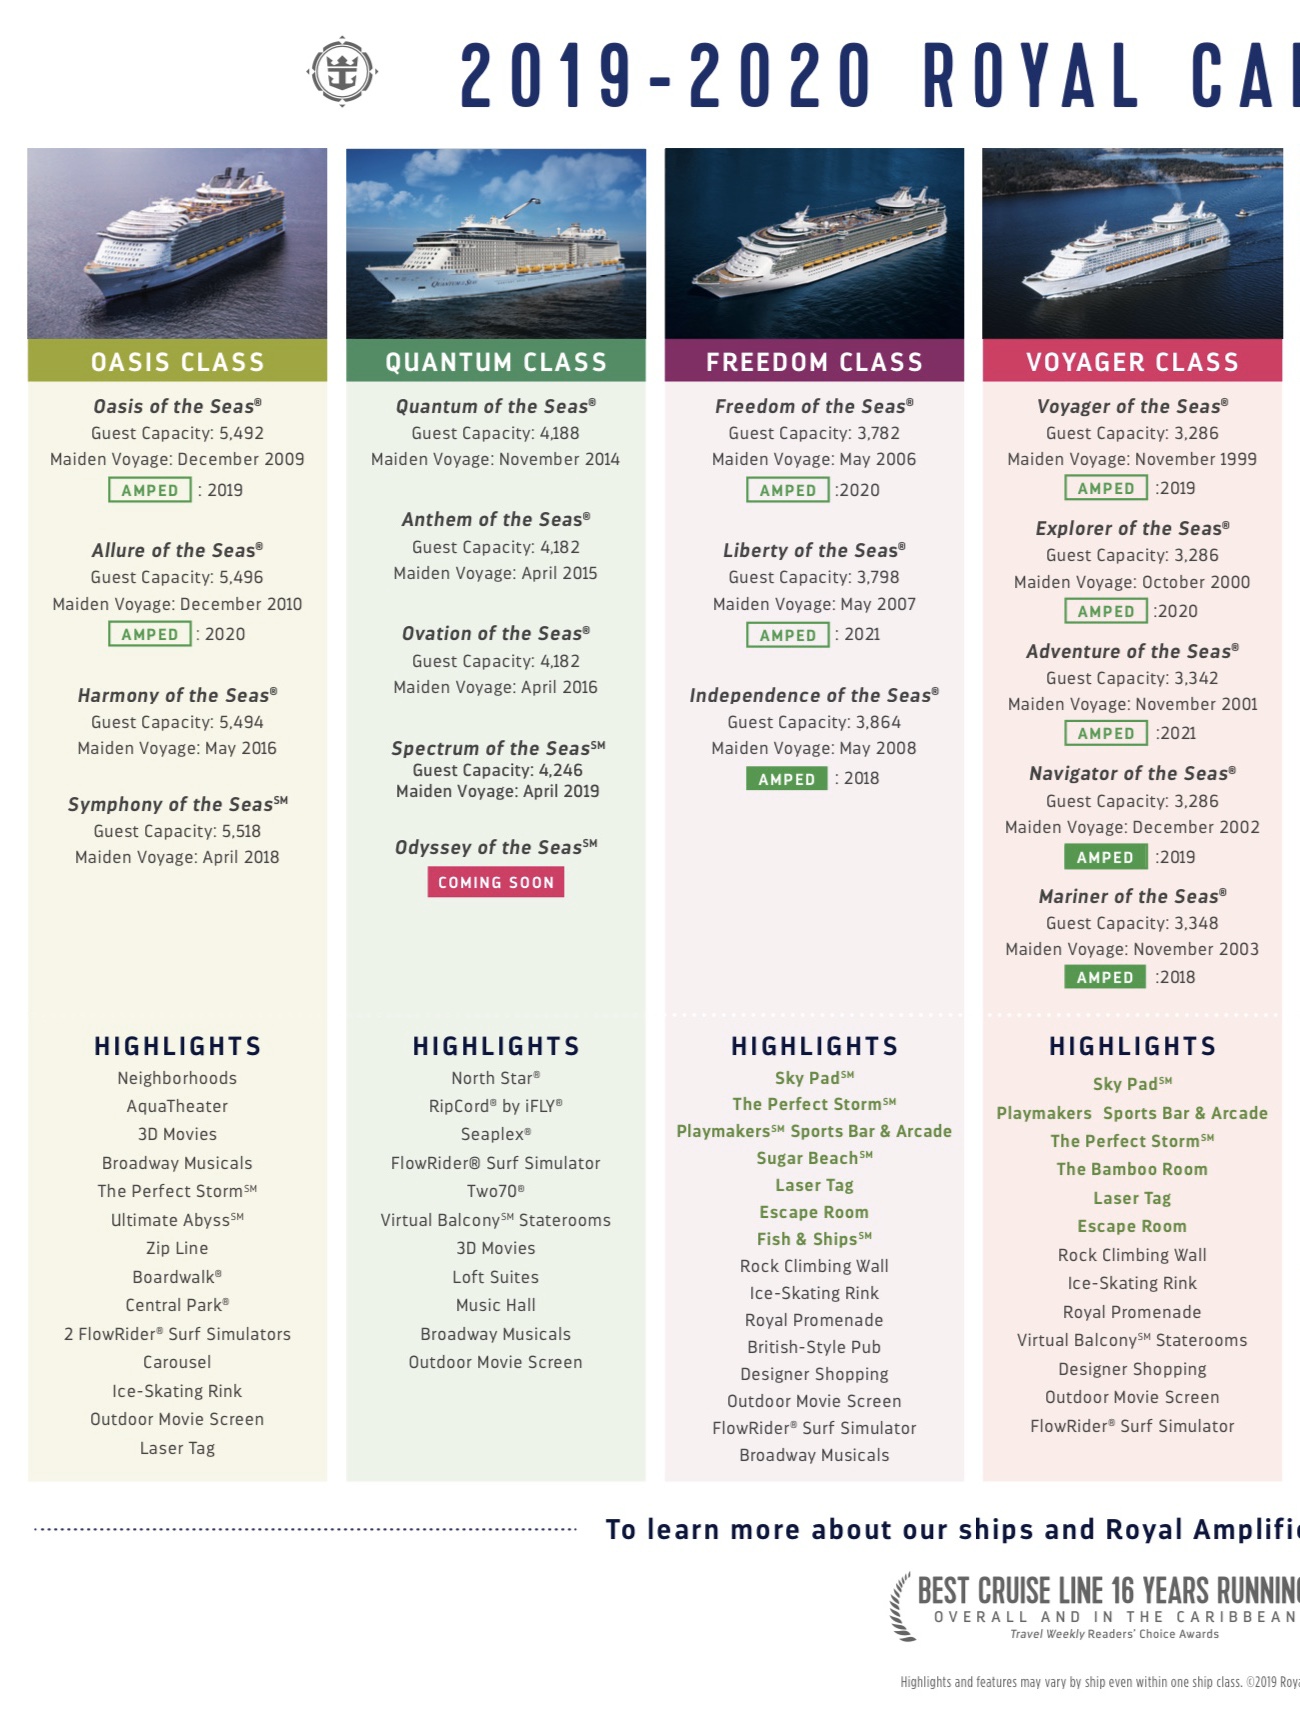 royal caribbean cruise ships compare